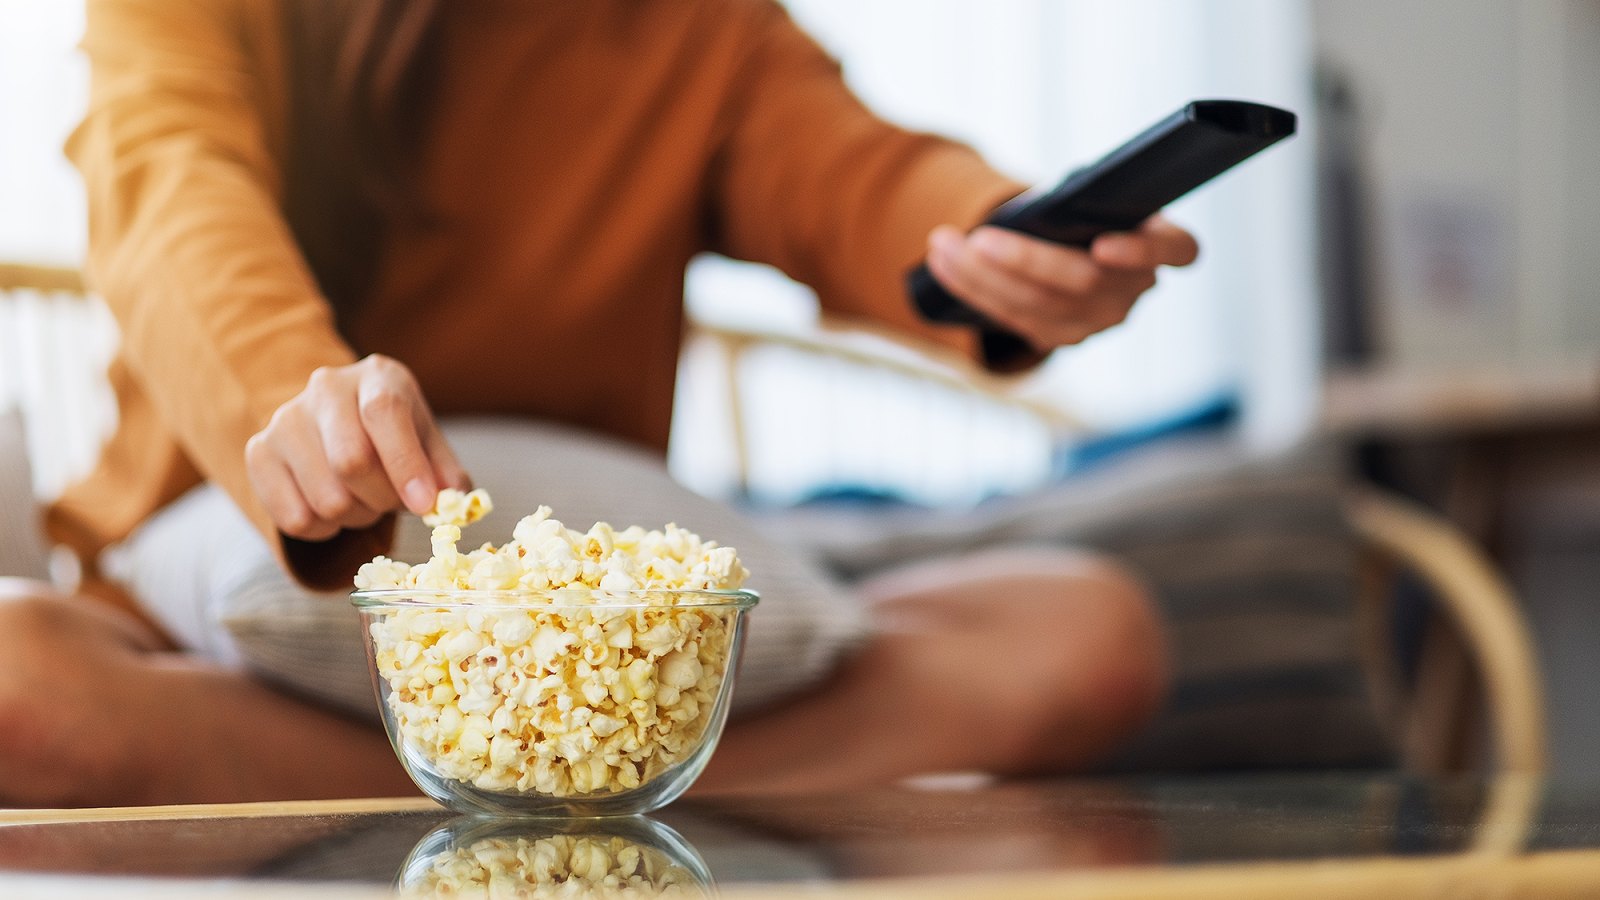 eating-tv-bored-popcorn-snack